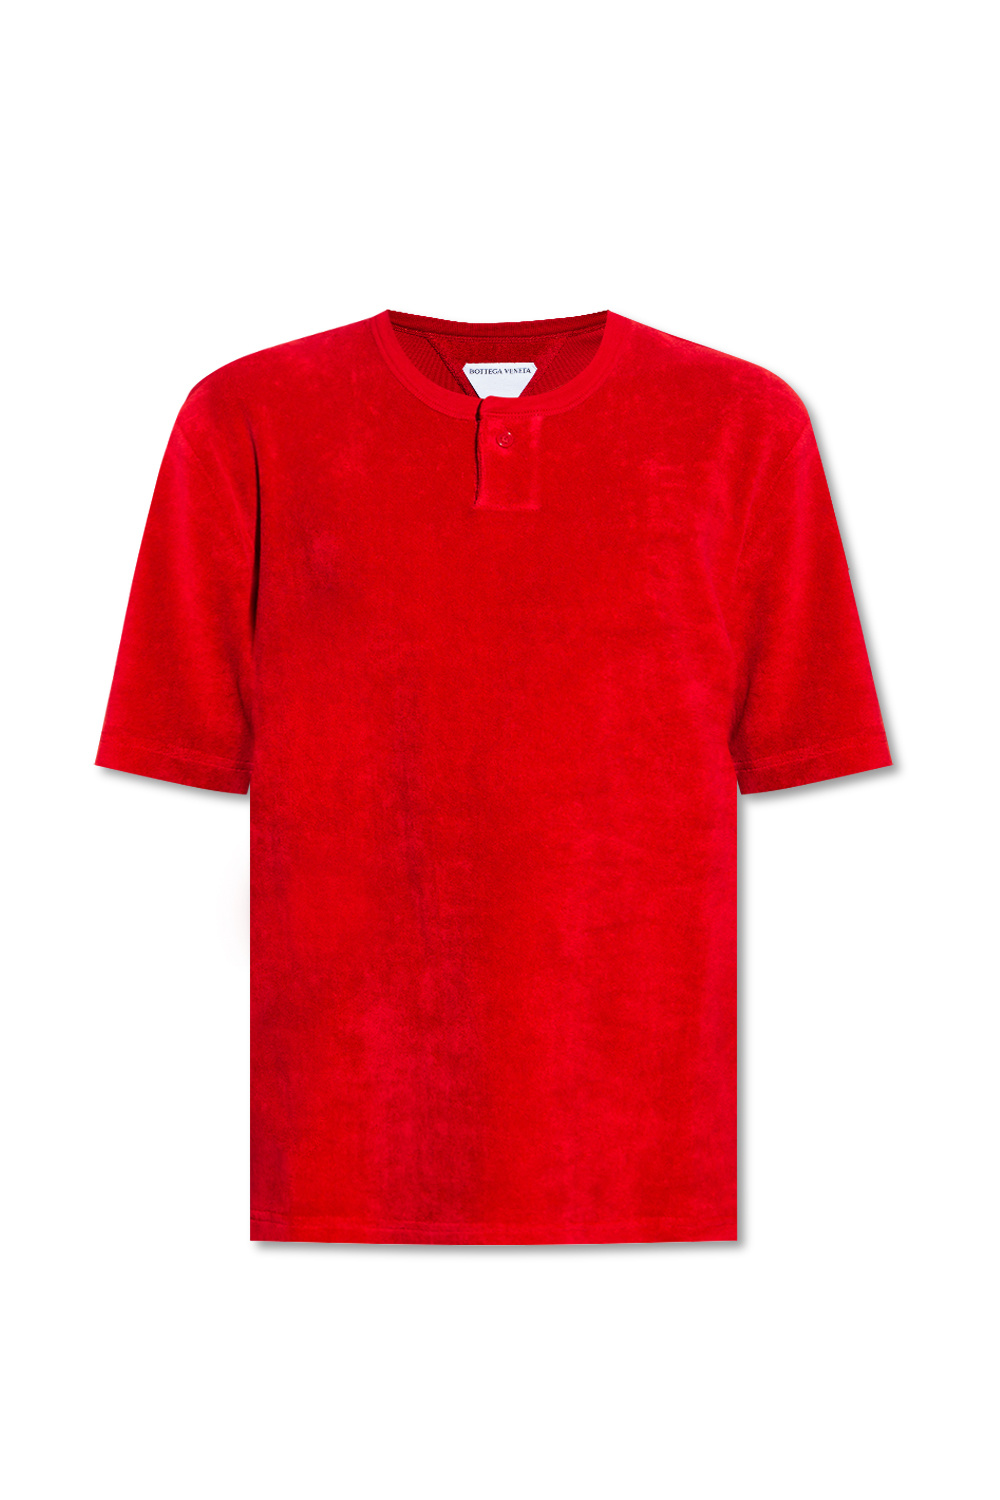 Terry Sweatshirt – Red Ribbon